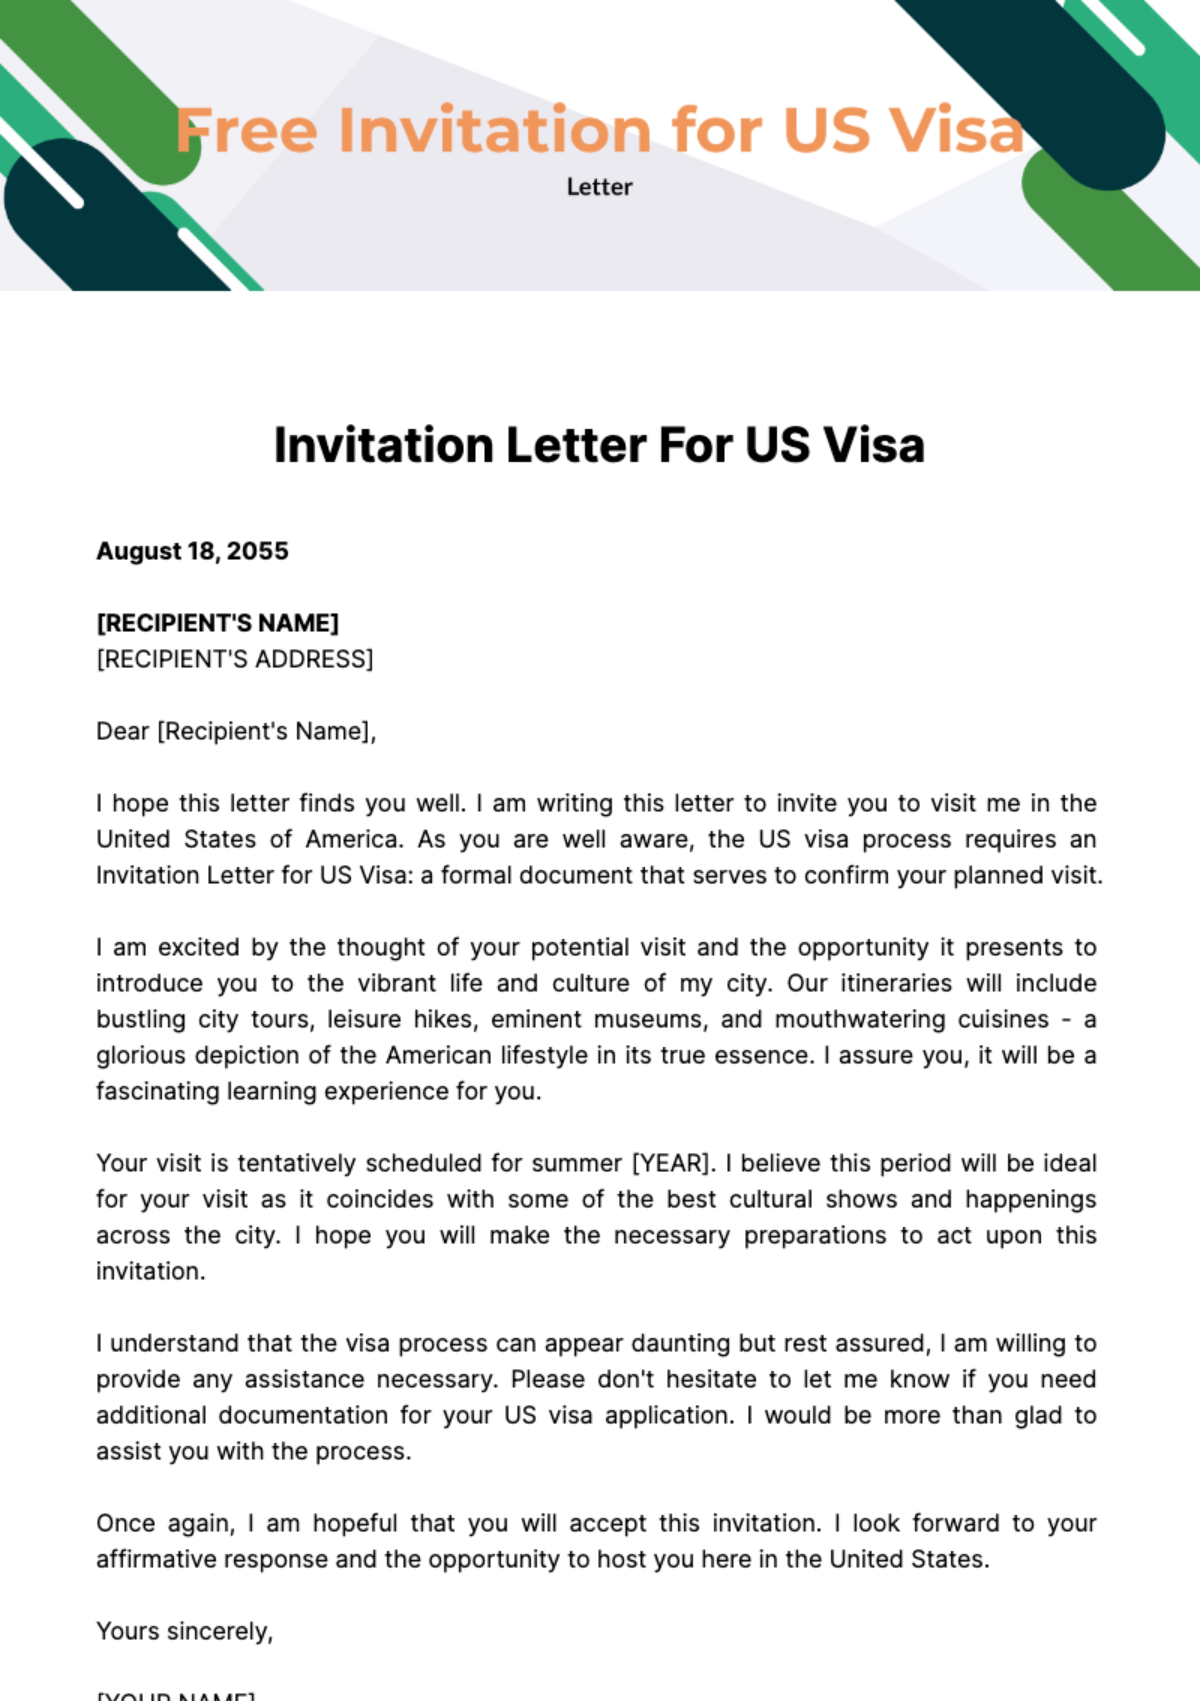 Free Invitation Letter for US Visa Template